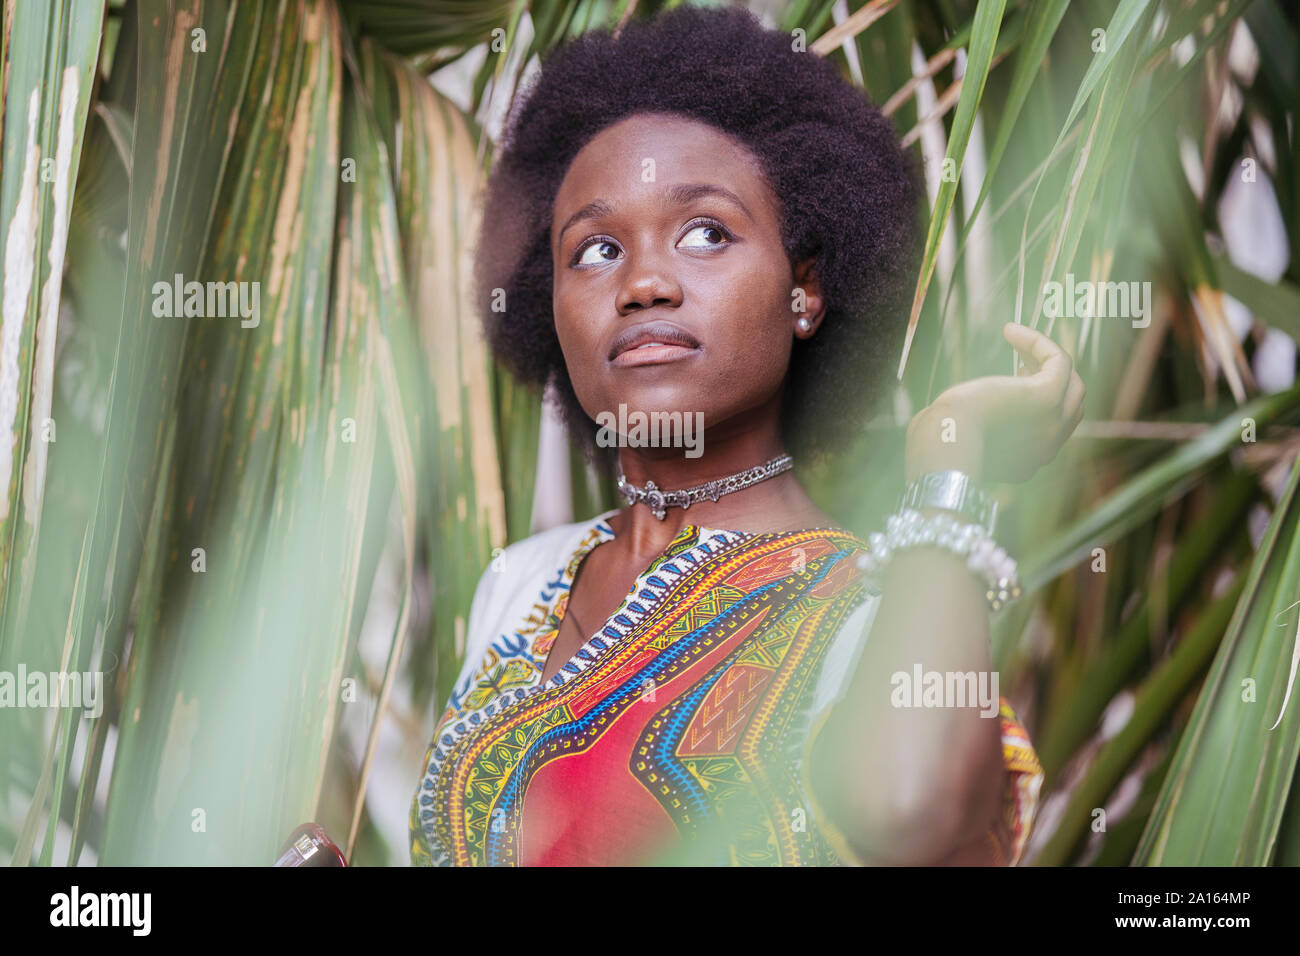 Young woman standing among tropical plants Stock Photo